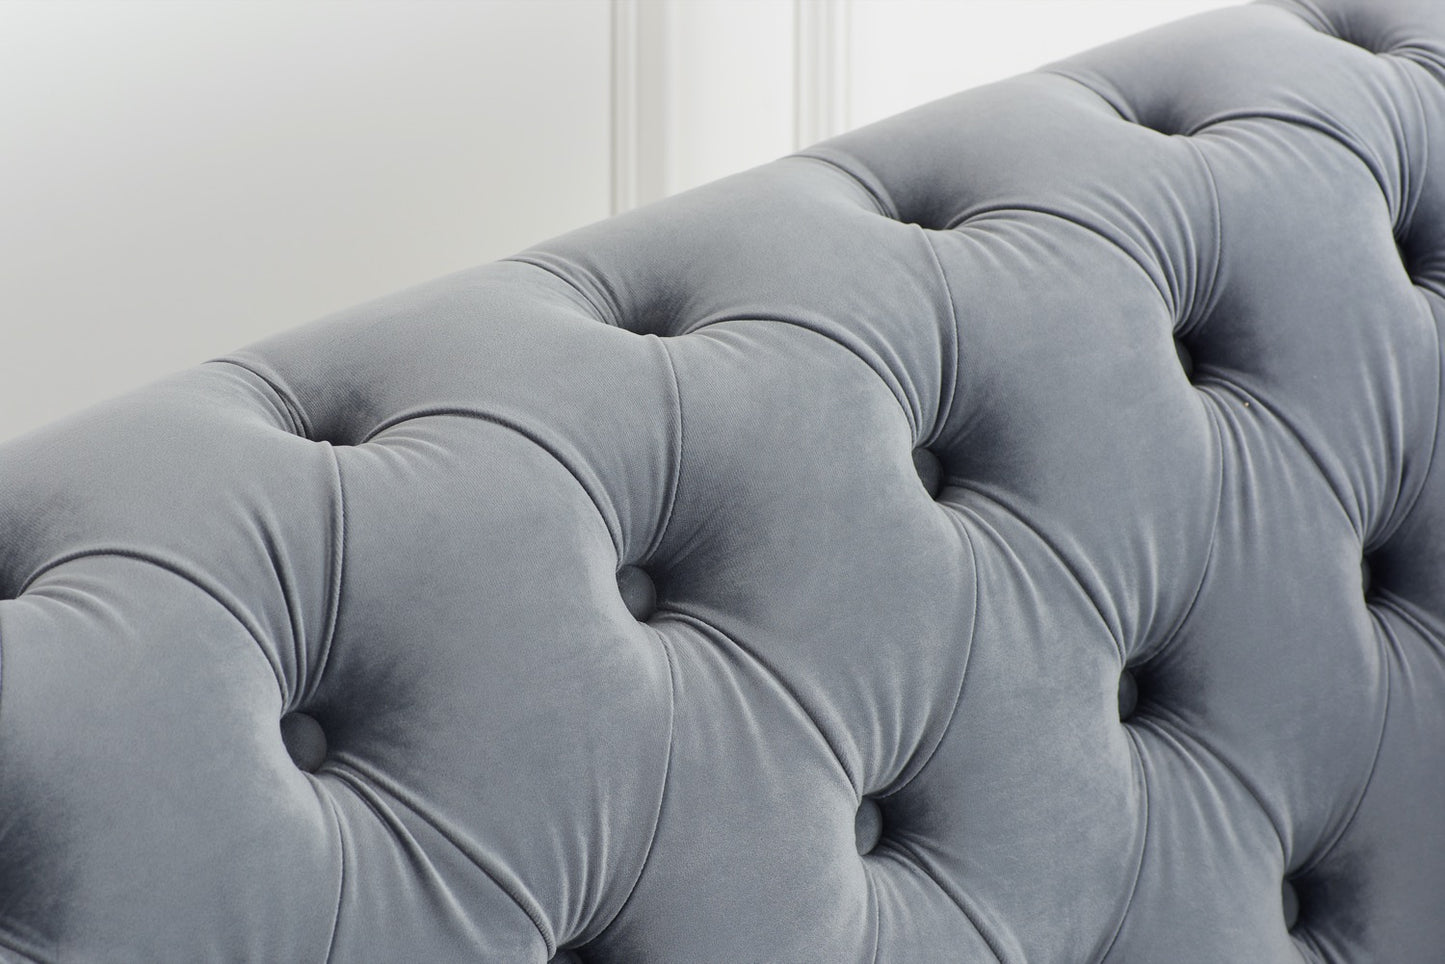 Highland 2 Seater Sofa - Grey